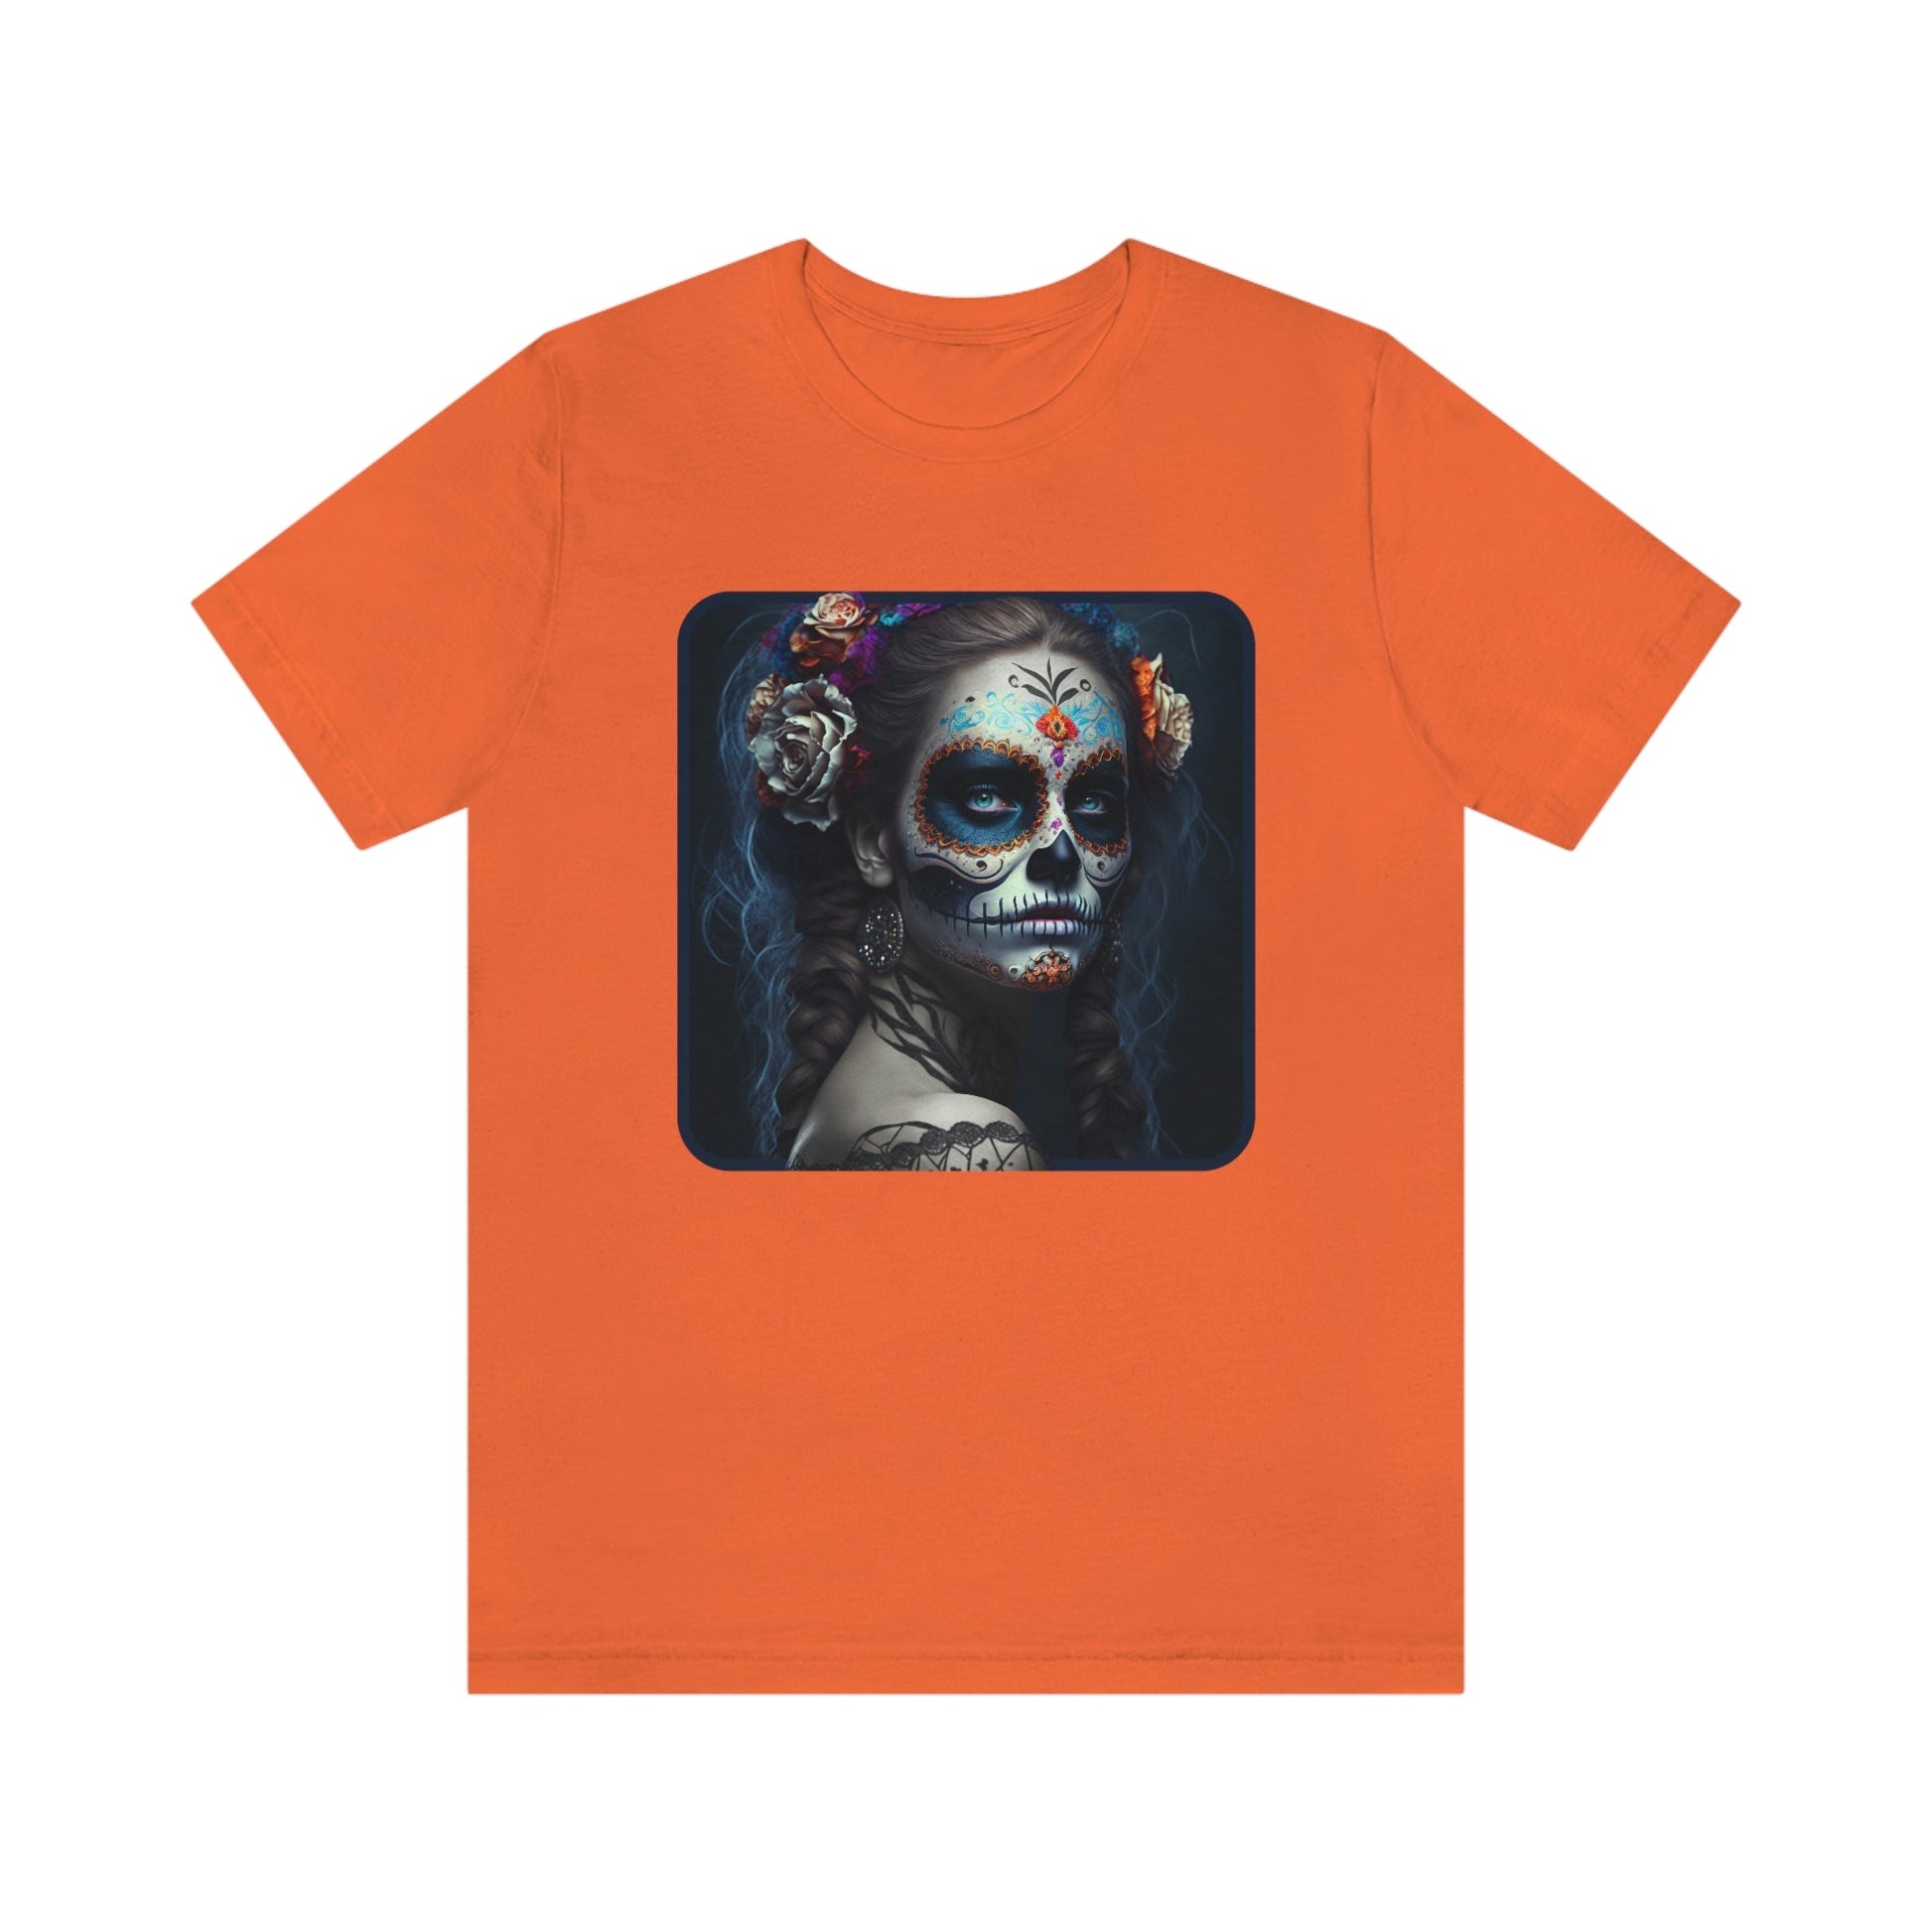 Women's Shirts with Skulls - Sugar Soul - Bind on Equip - 32185434547250719130